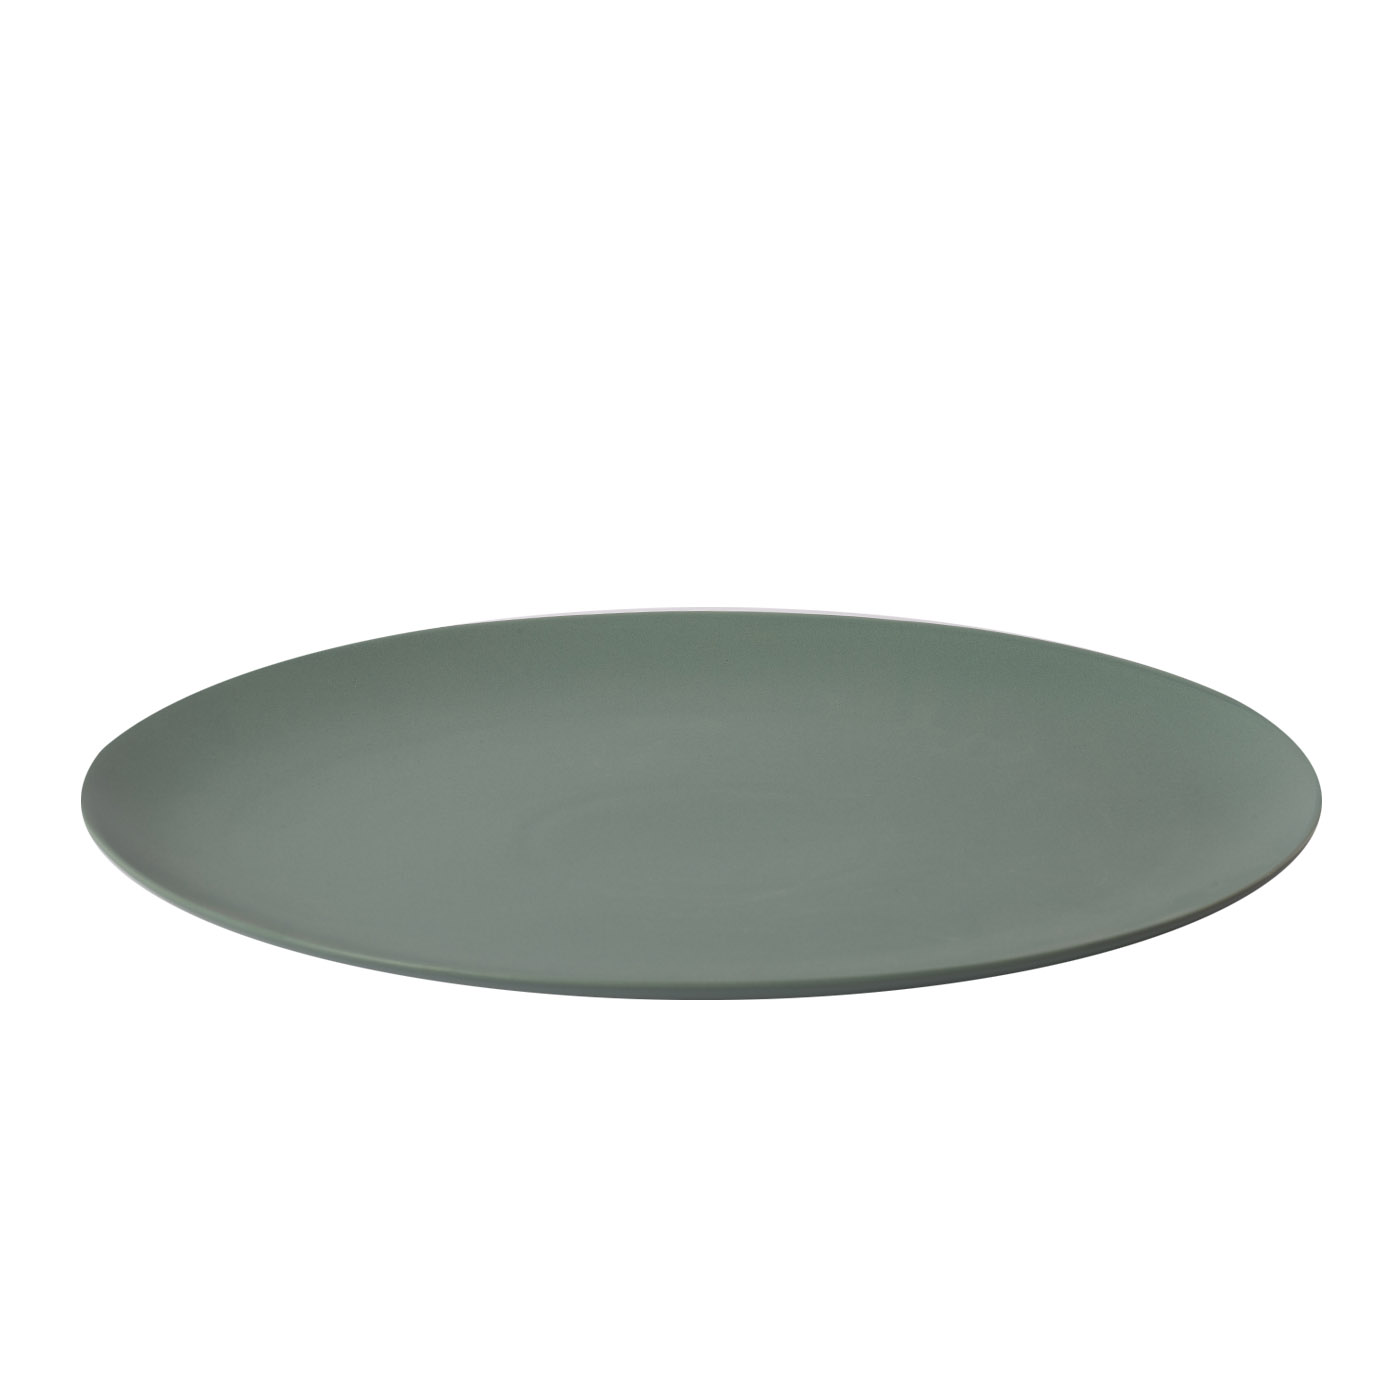 Green Ceramic Dinner Plates